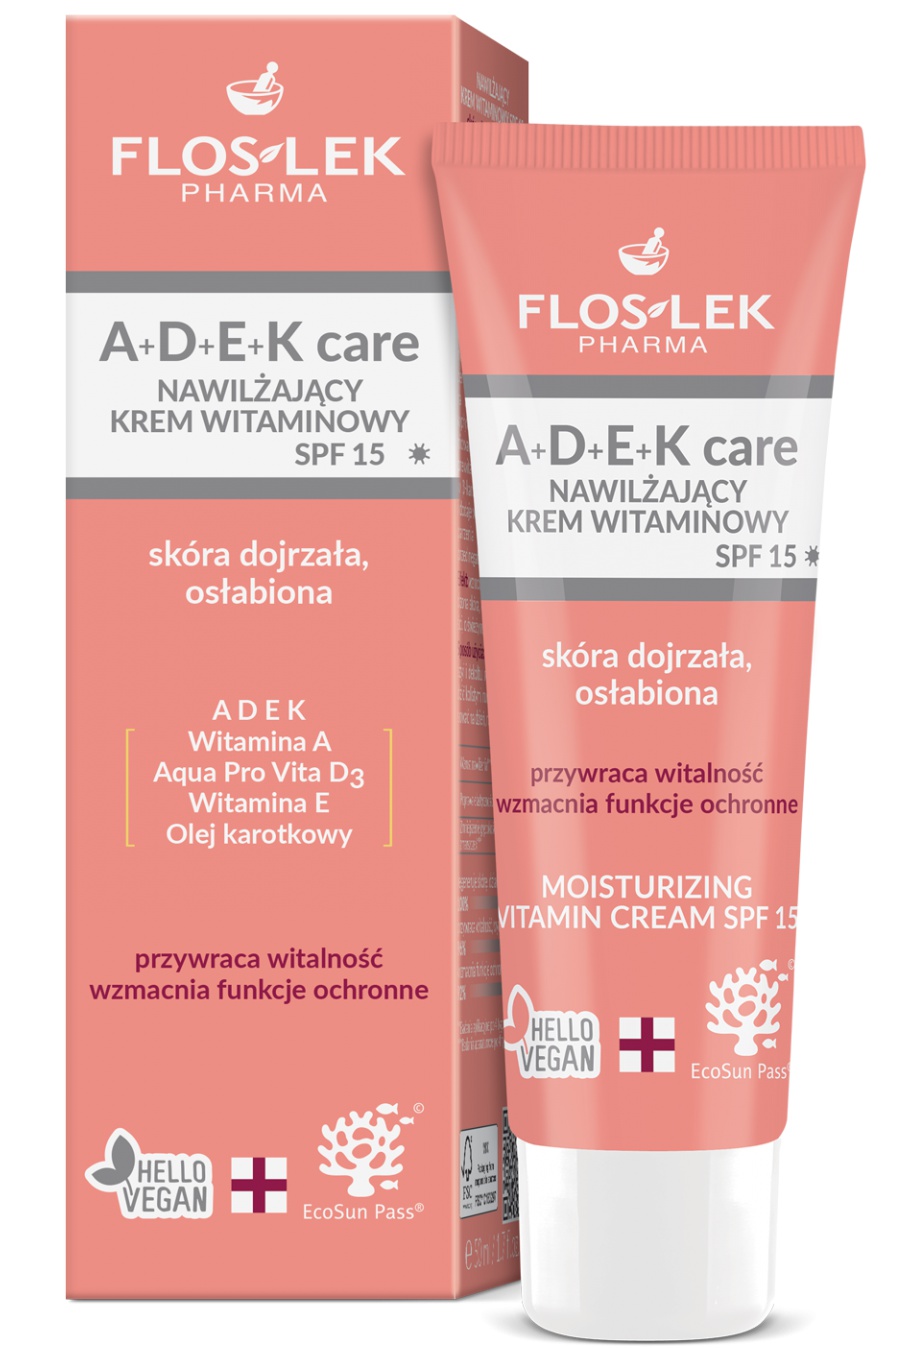 Floslek A+D+E+K Care Moisturizing Vitamin Cream SPF 15